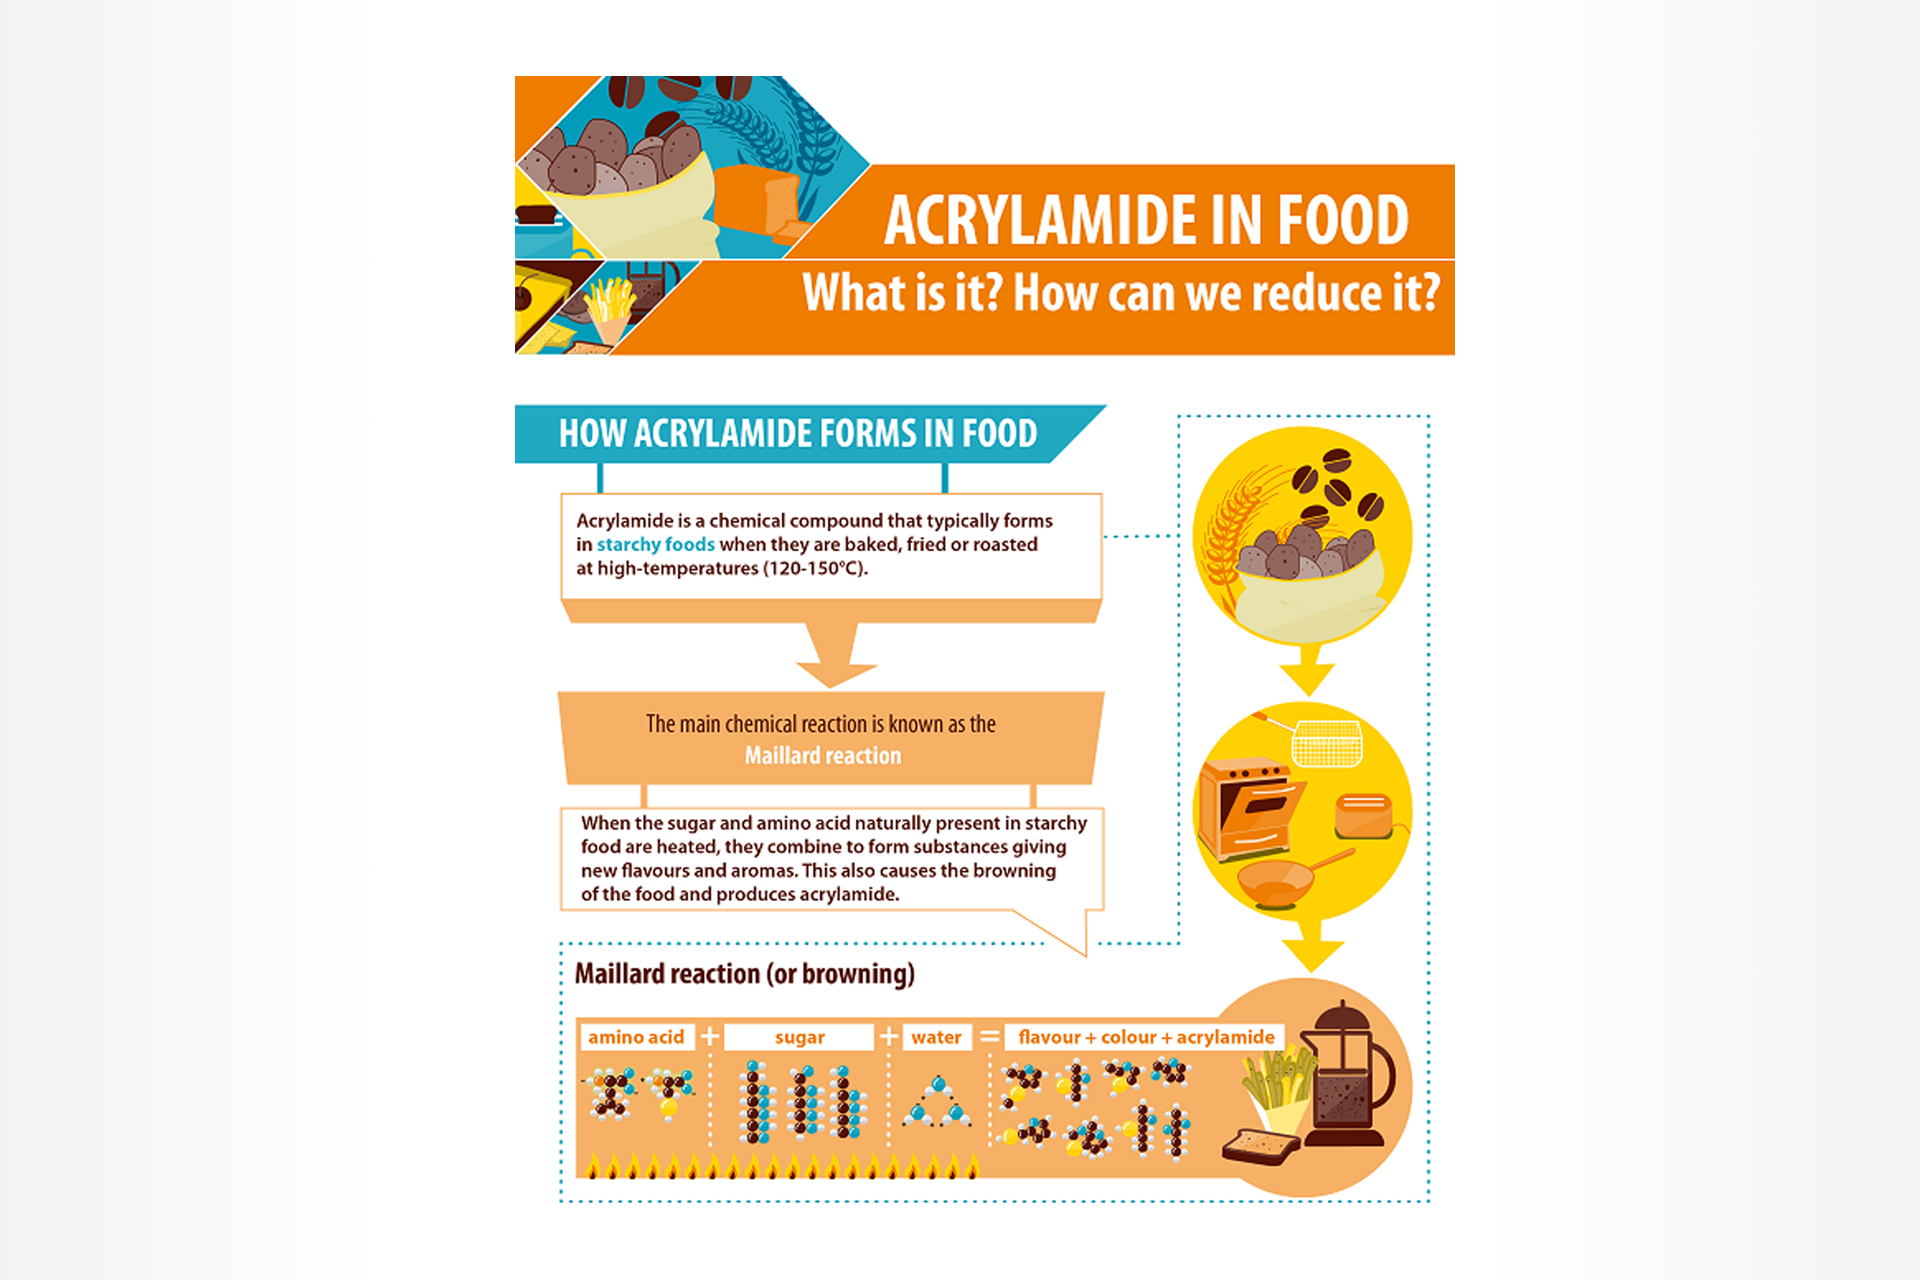 Transposition of reduction of acrylamide in food legislation